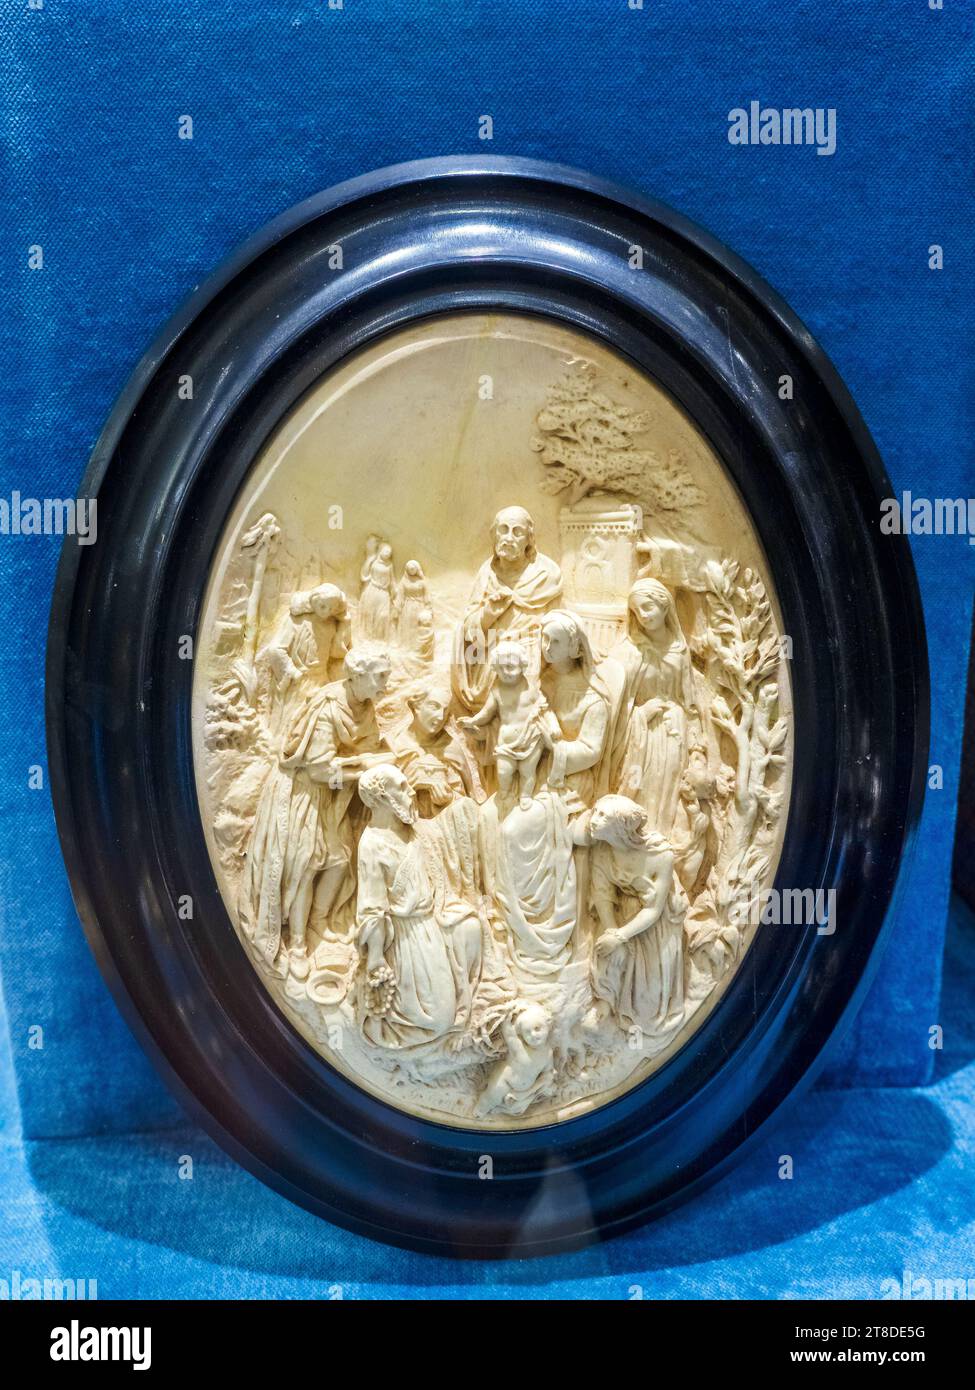 Adorazione dei Magi (adoration des Mages) de G. Serafini - plâtre, 19e siècle - Museo Diocesiano di Monreale - Palerme, Italie Banque D'Images